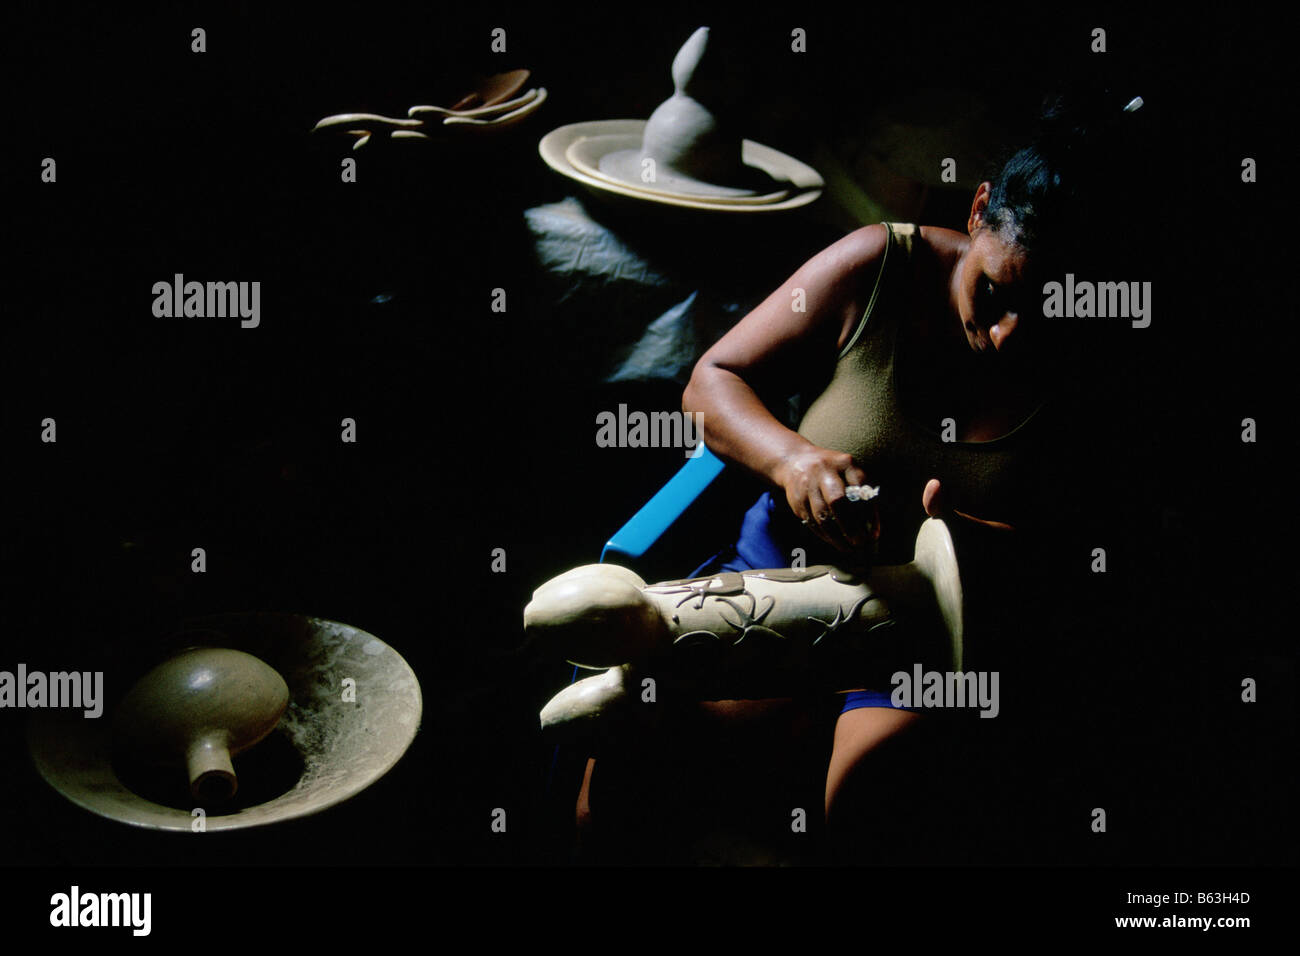 HONDURAS / La Arada / Woman producing Lenca pottery. The Lenca people are indigenous of Central America. Stock Photo